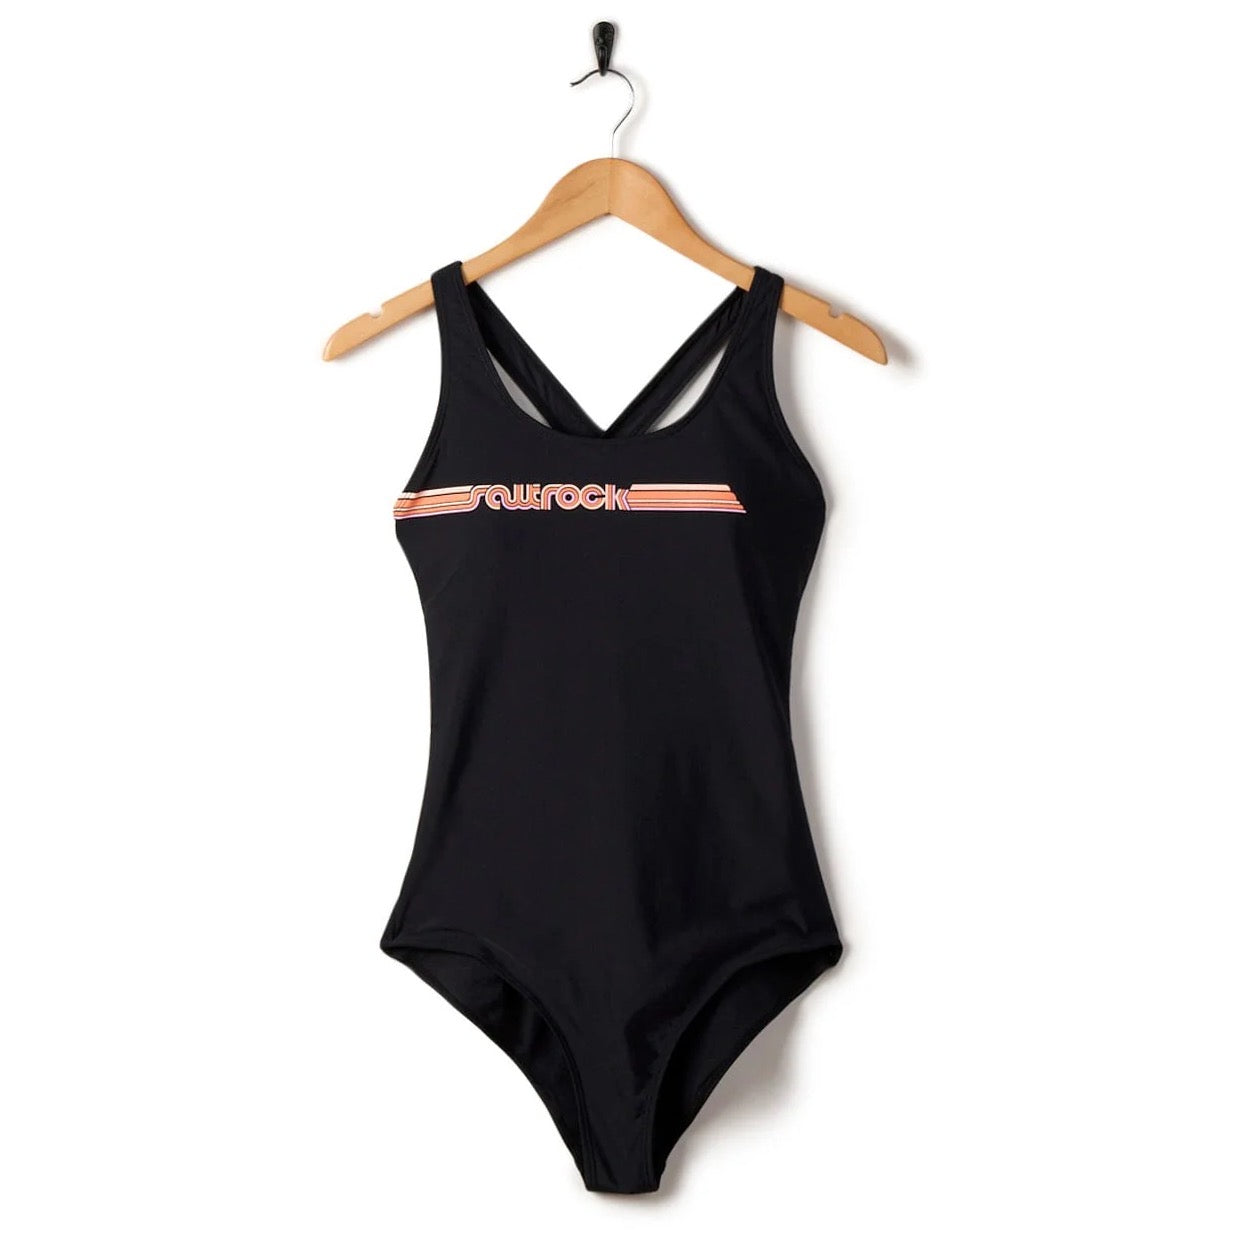 Saltrock Womens Corrine Retro Swimsuit Clothing XS ADULT / Black,SMALL ADULT / Black,MEDIUM ADULT / Black